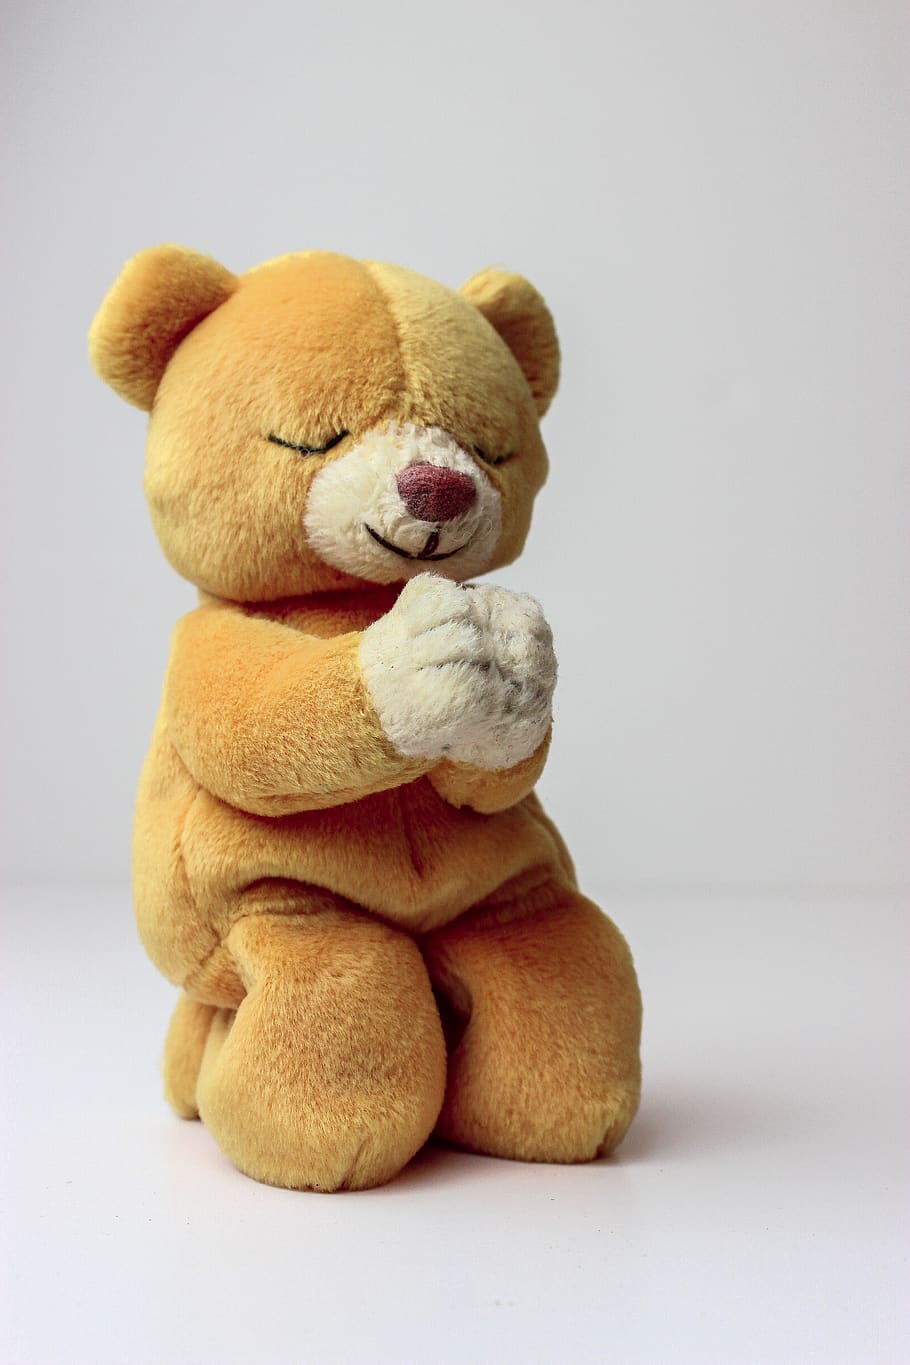 teddy bear, beanie baby, pray, praying, sweet, cute, brown